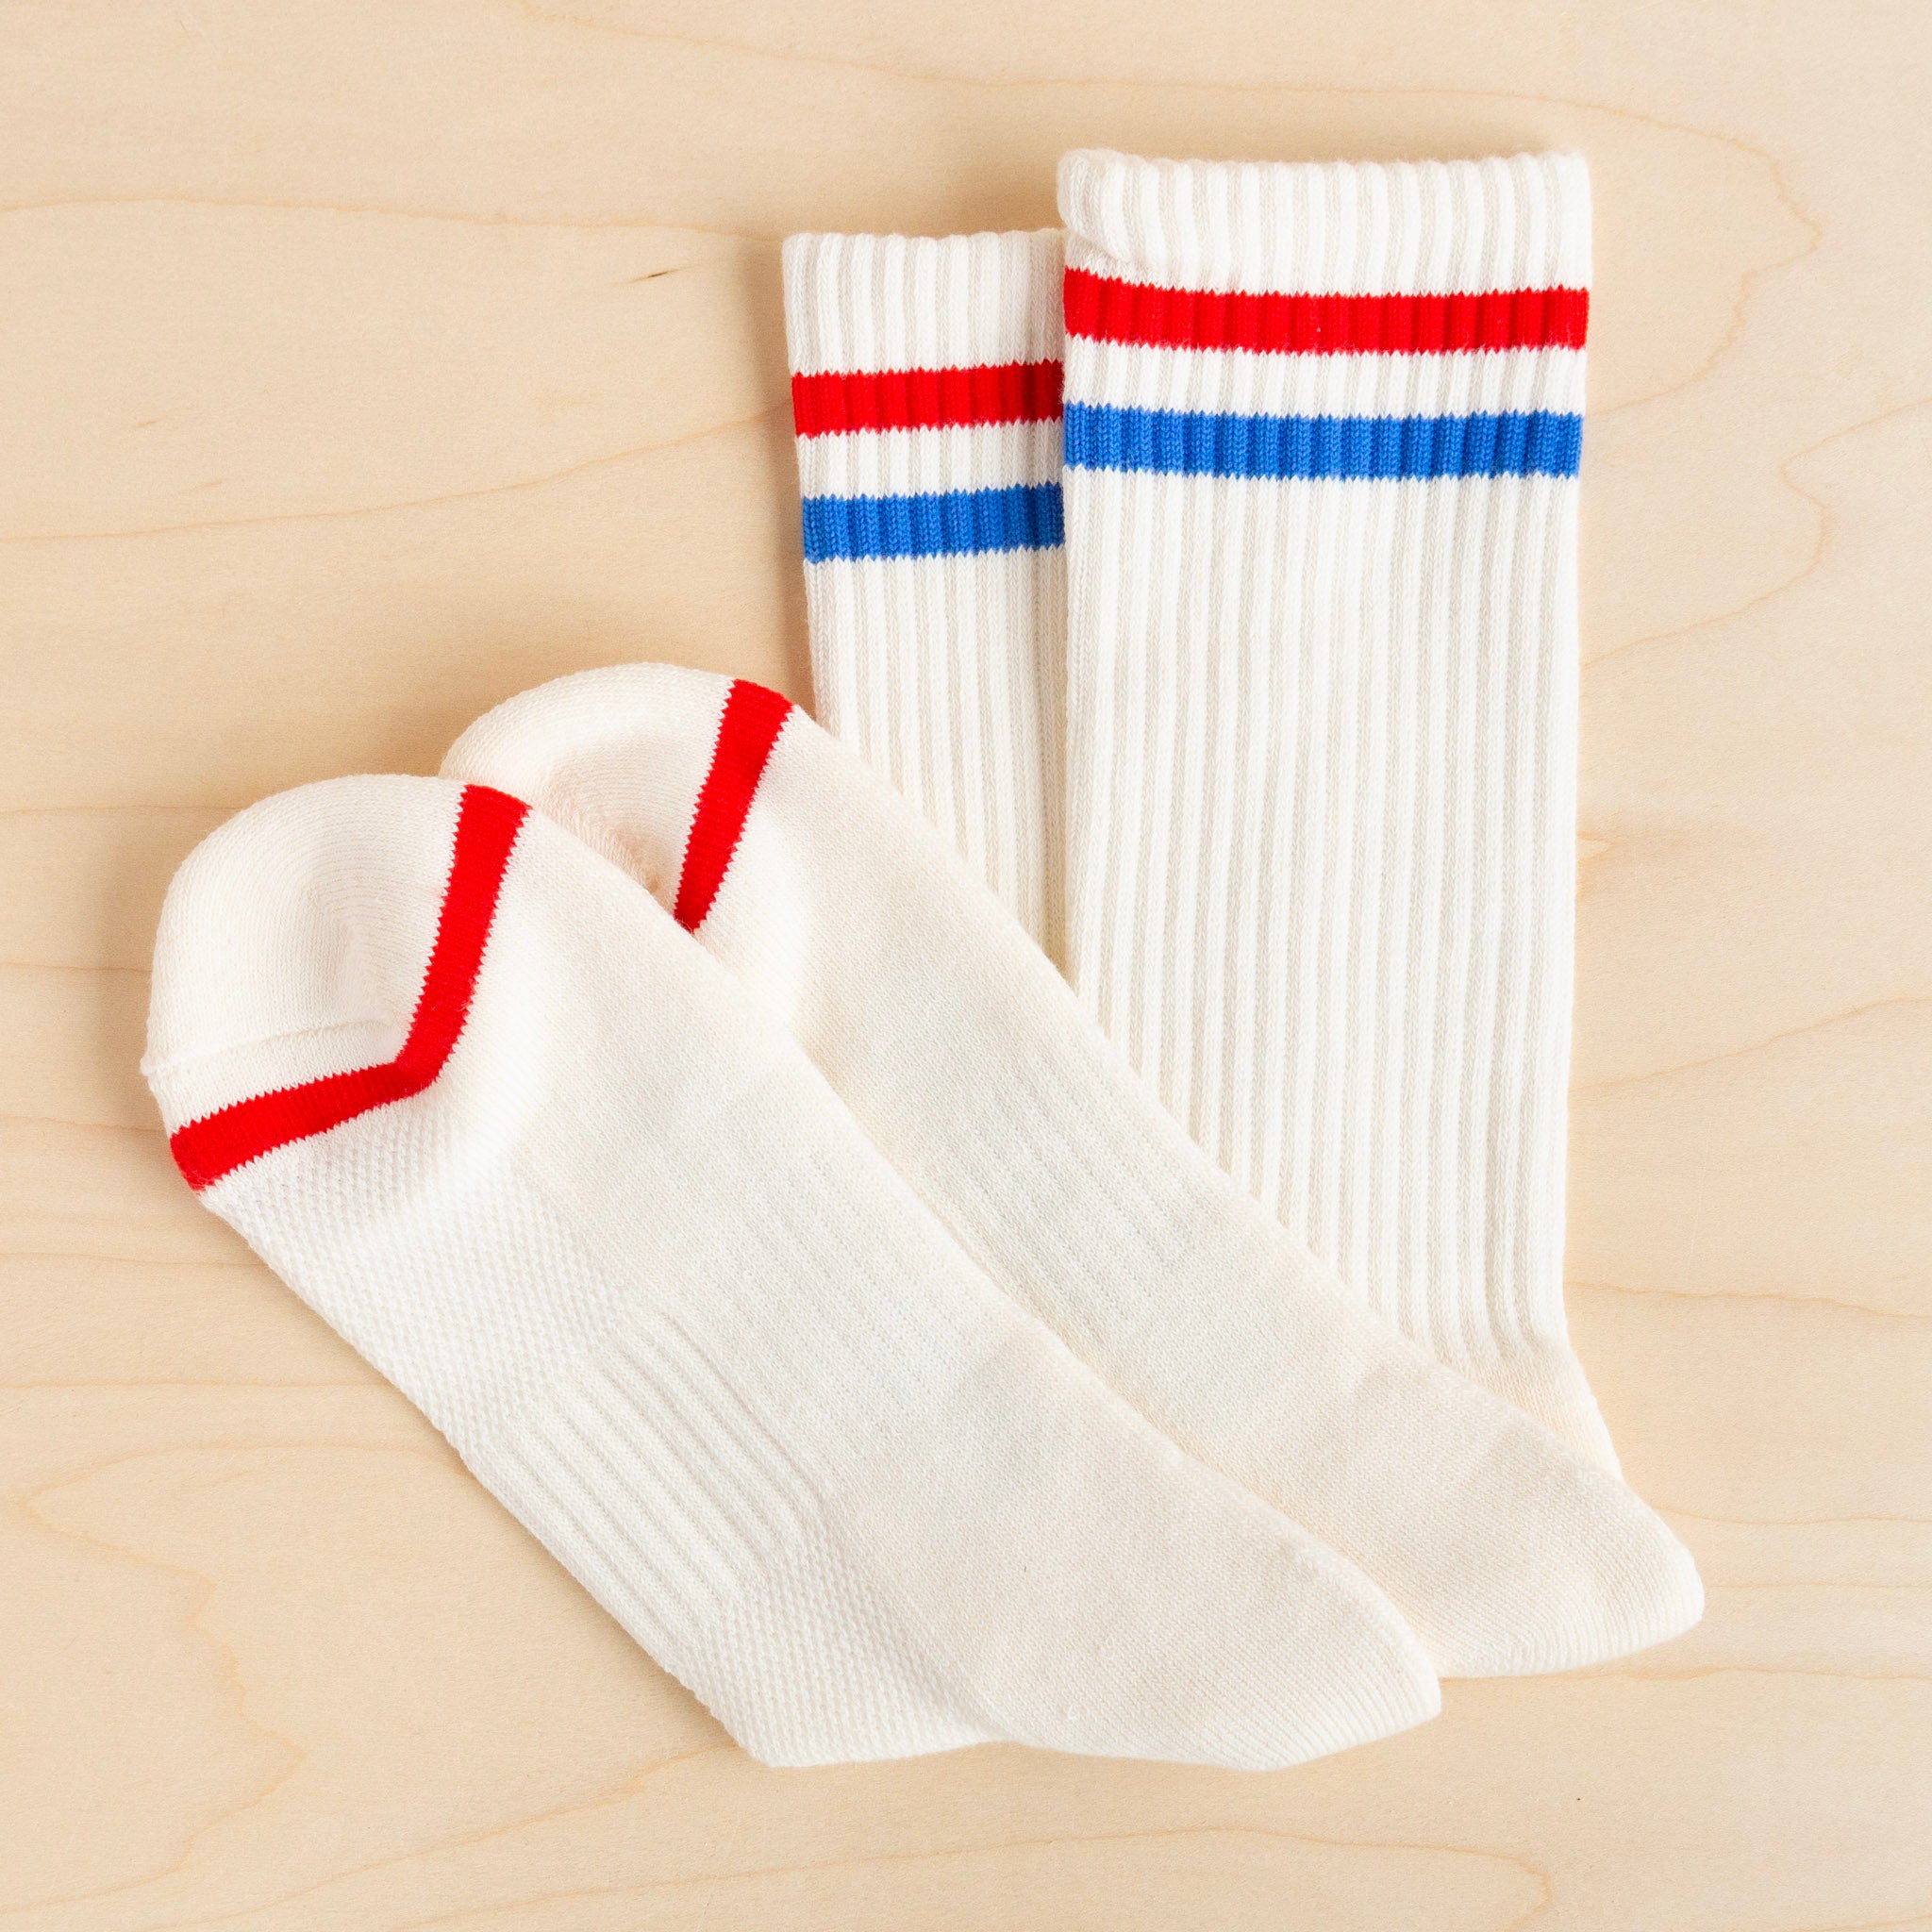 Le Bon Shoppe: Boyfriend Socks - Extended Size